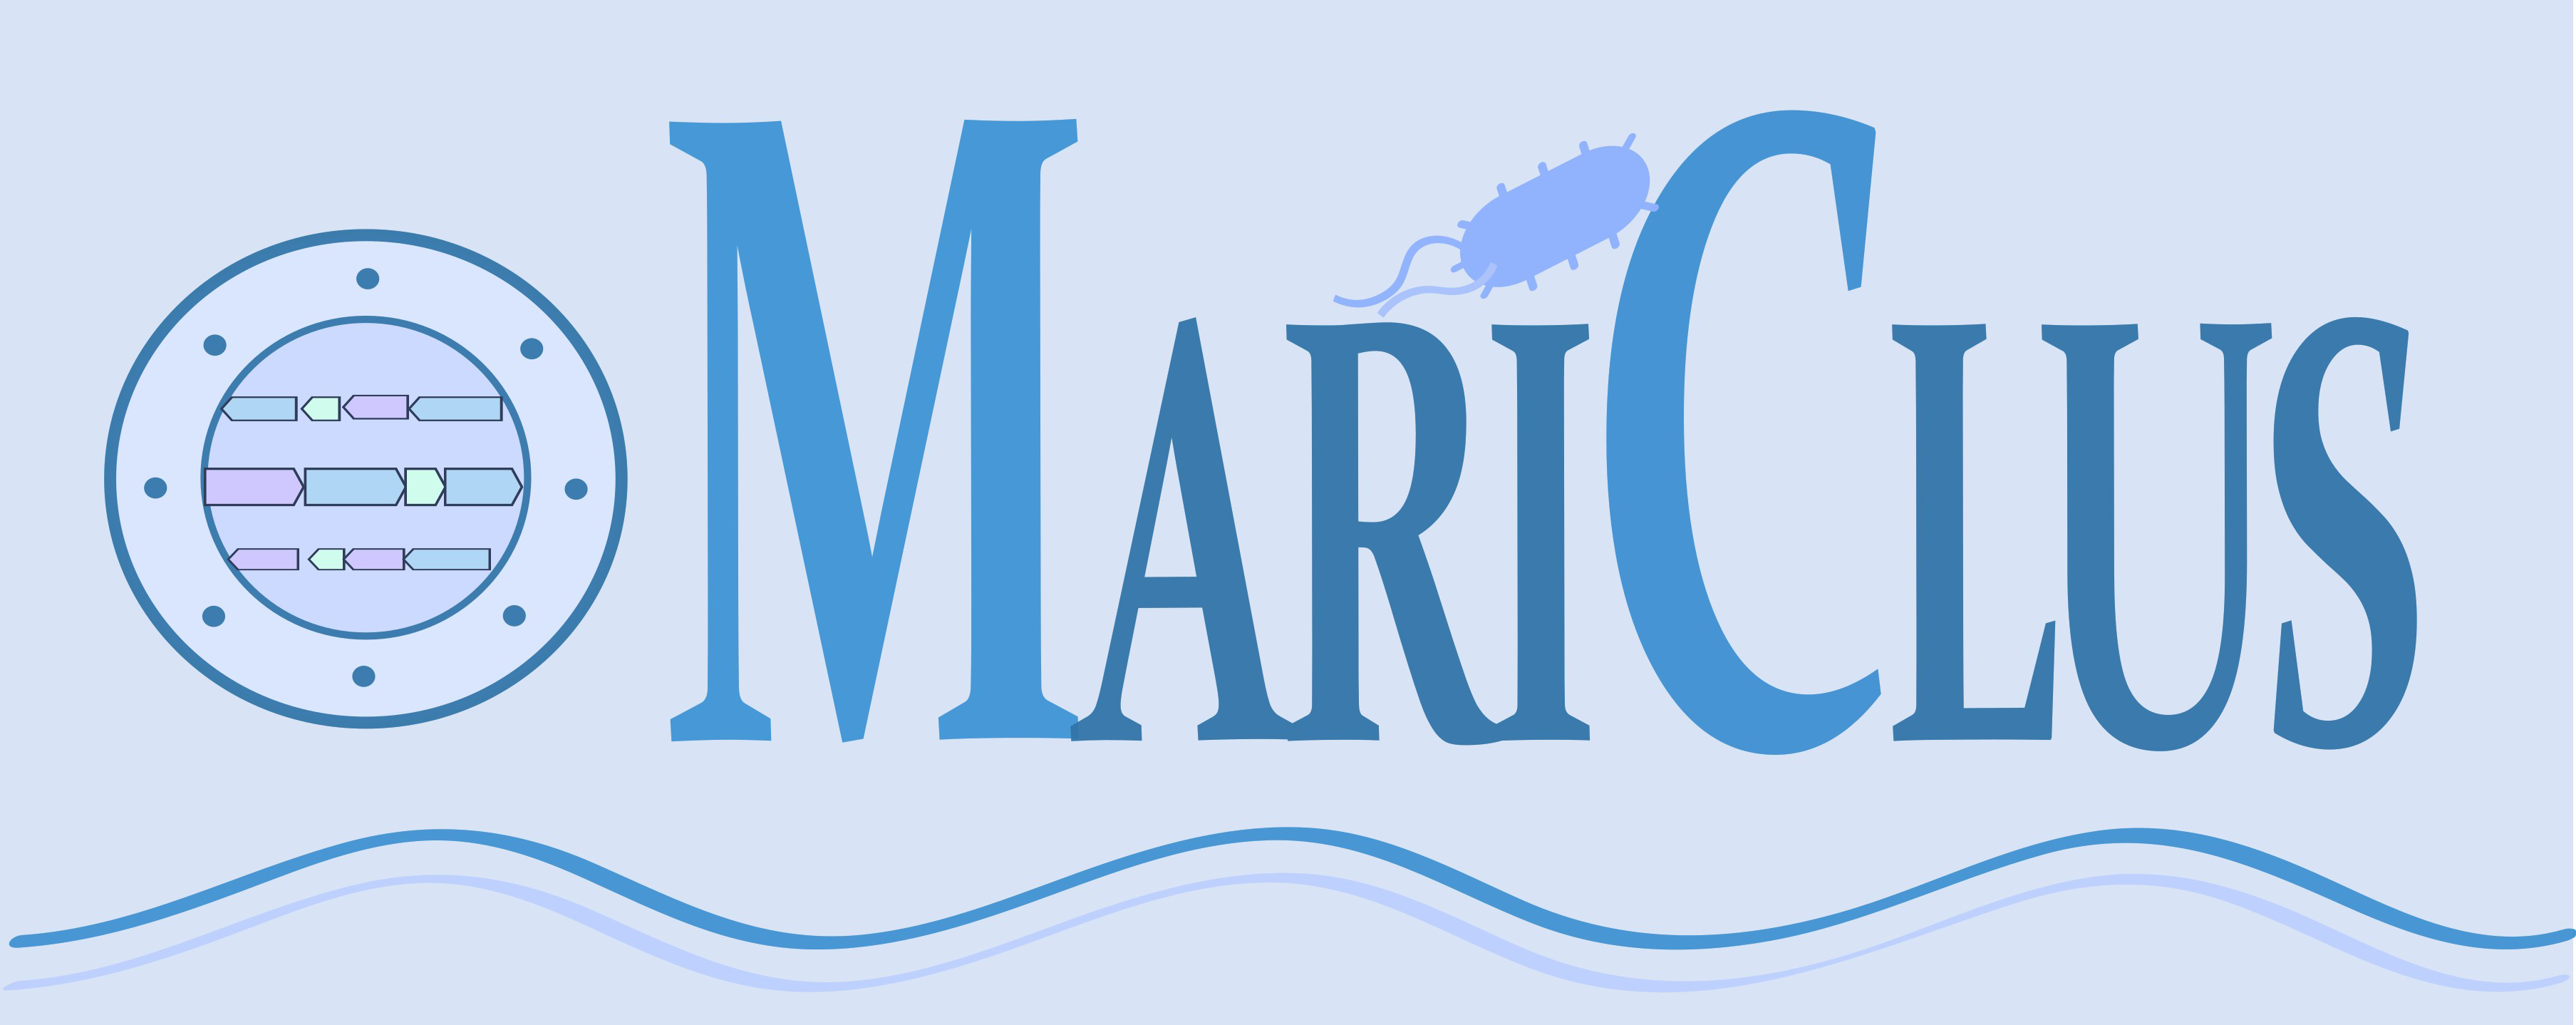 Logo of Mariclus